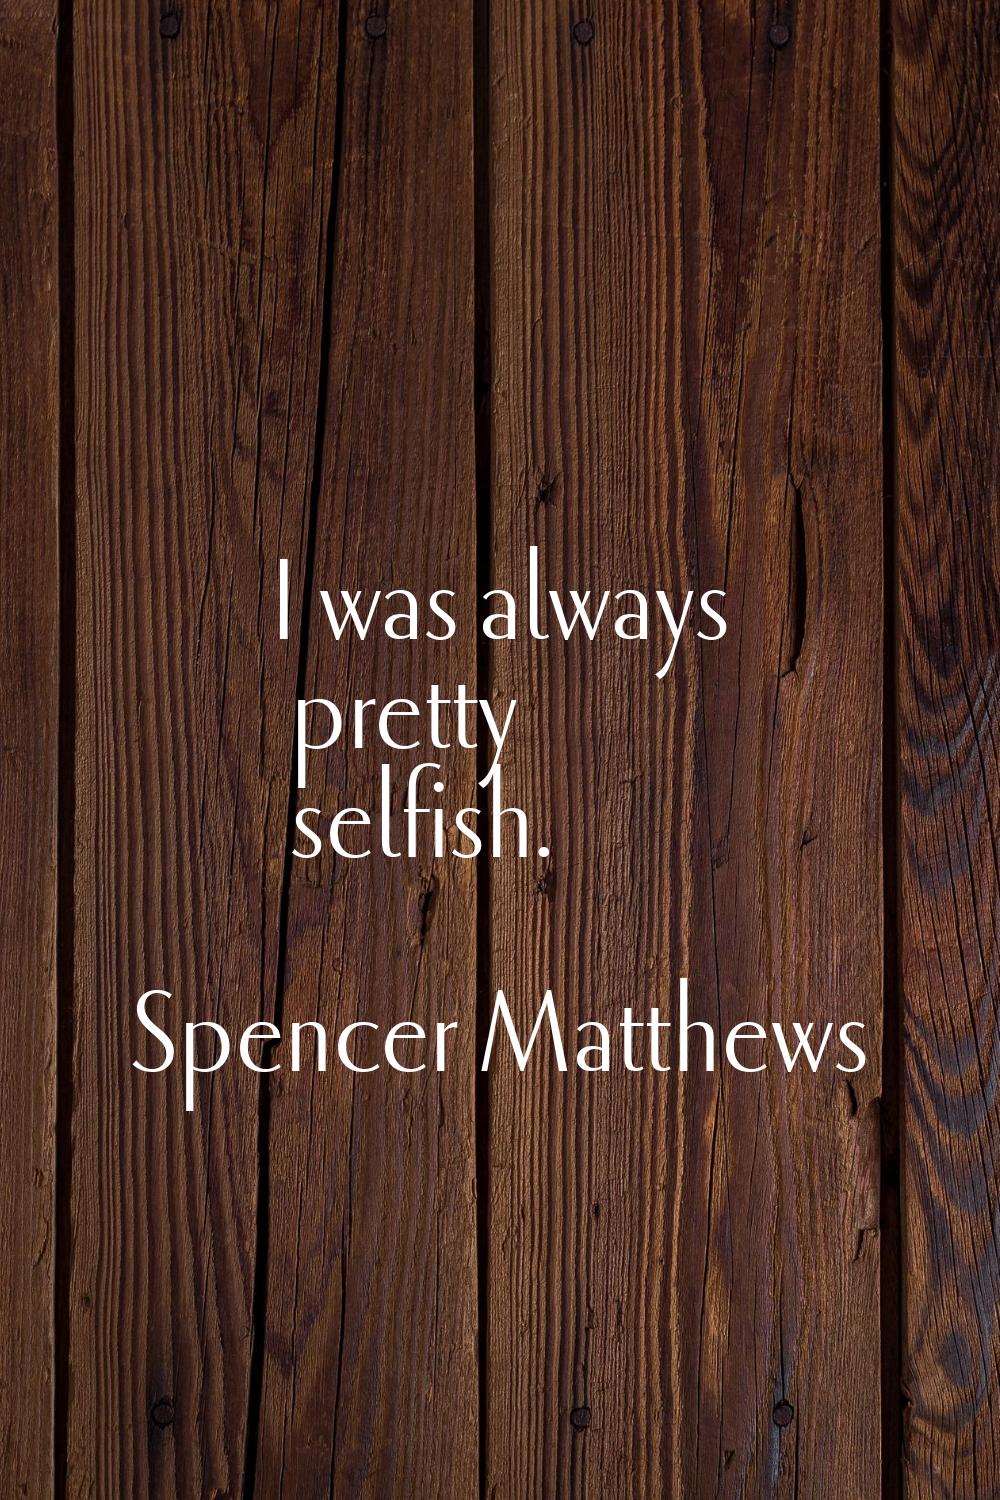 I was always pretty selfish.